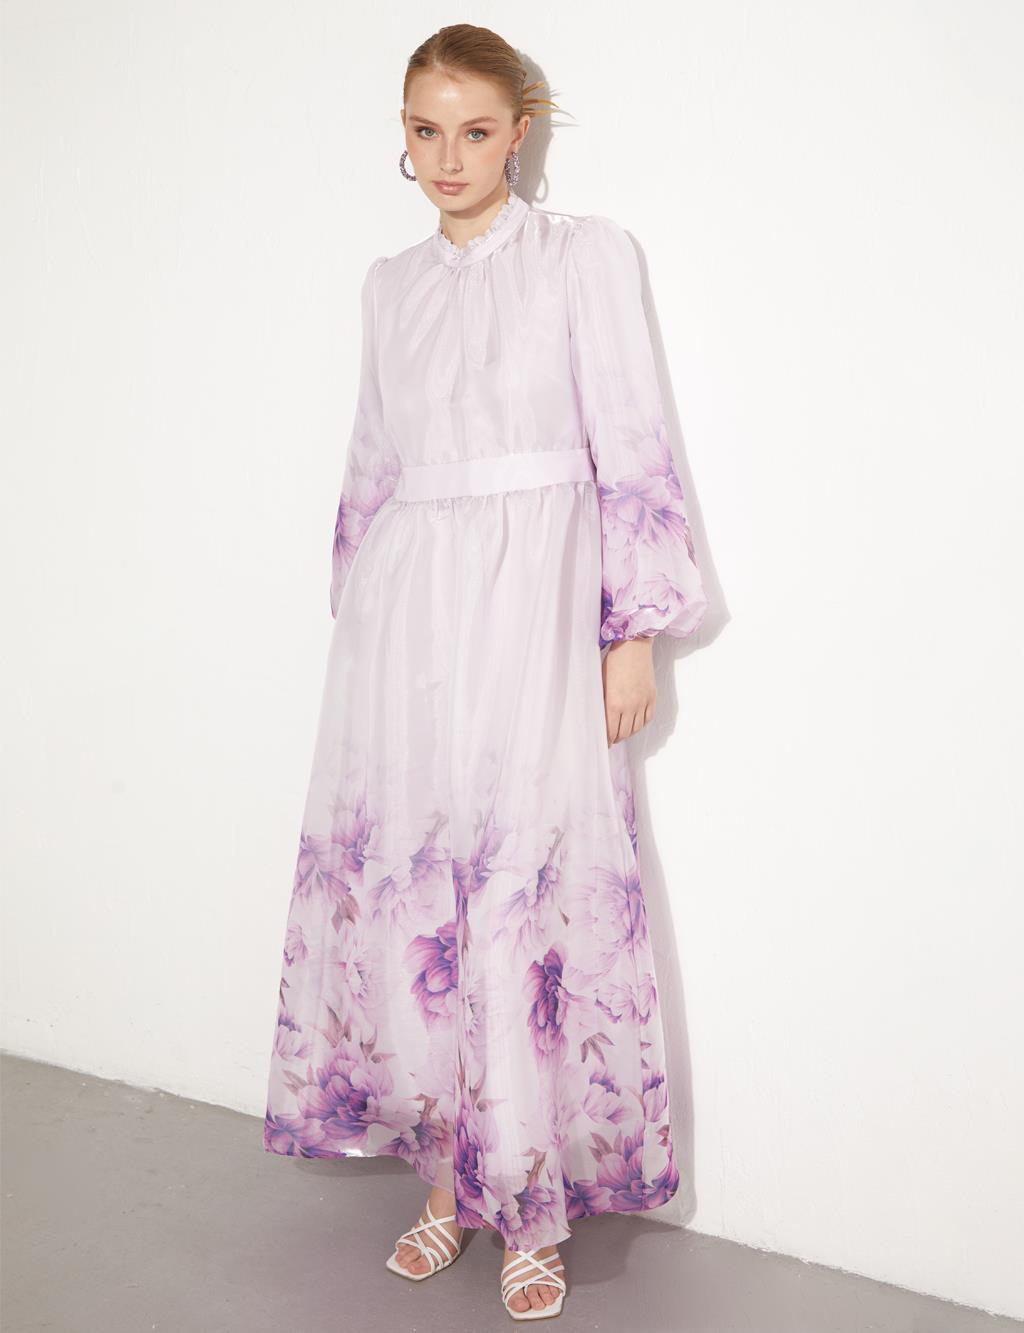 Floral Pattern Chiffon Covered Dress Light Lilac